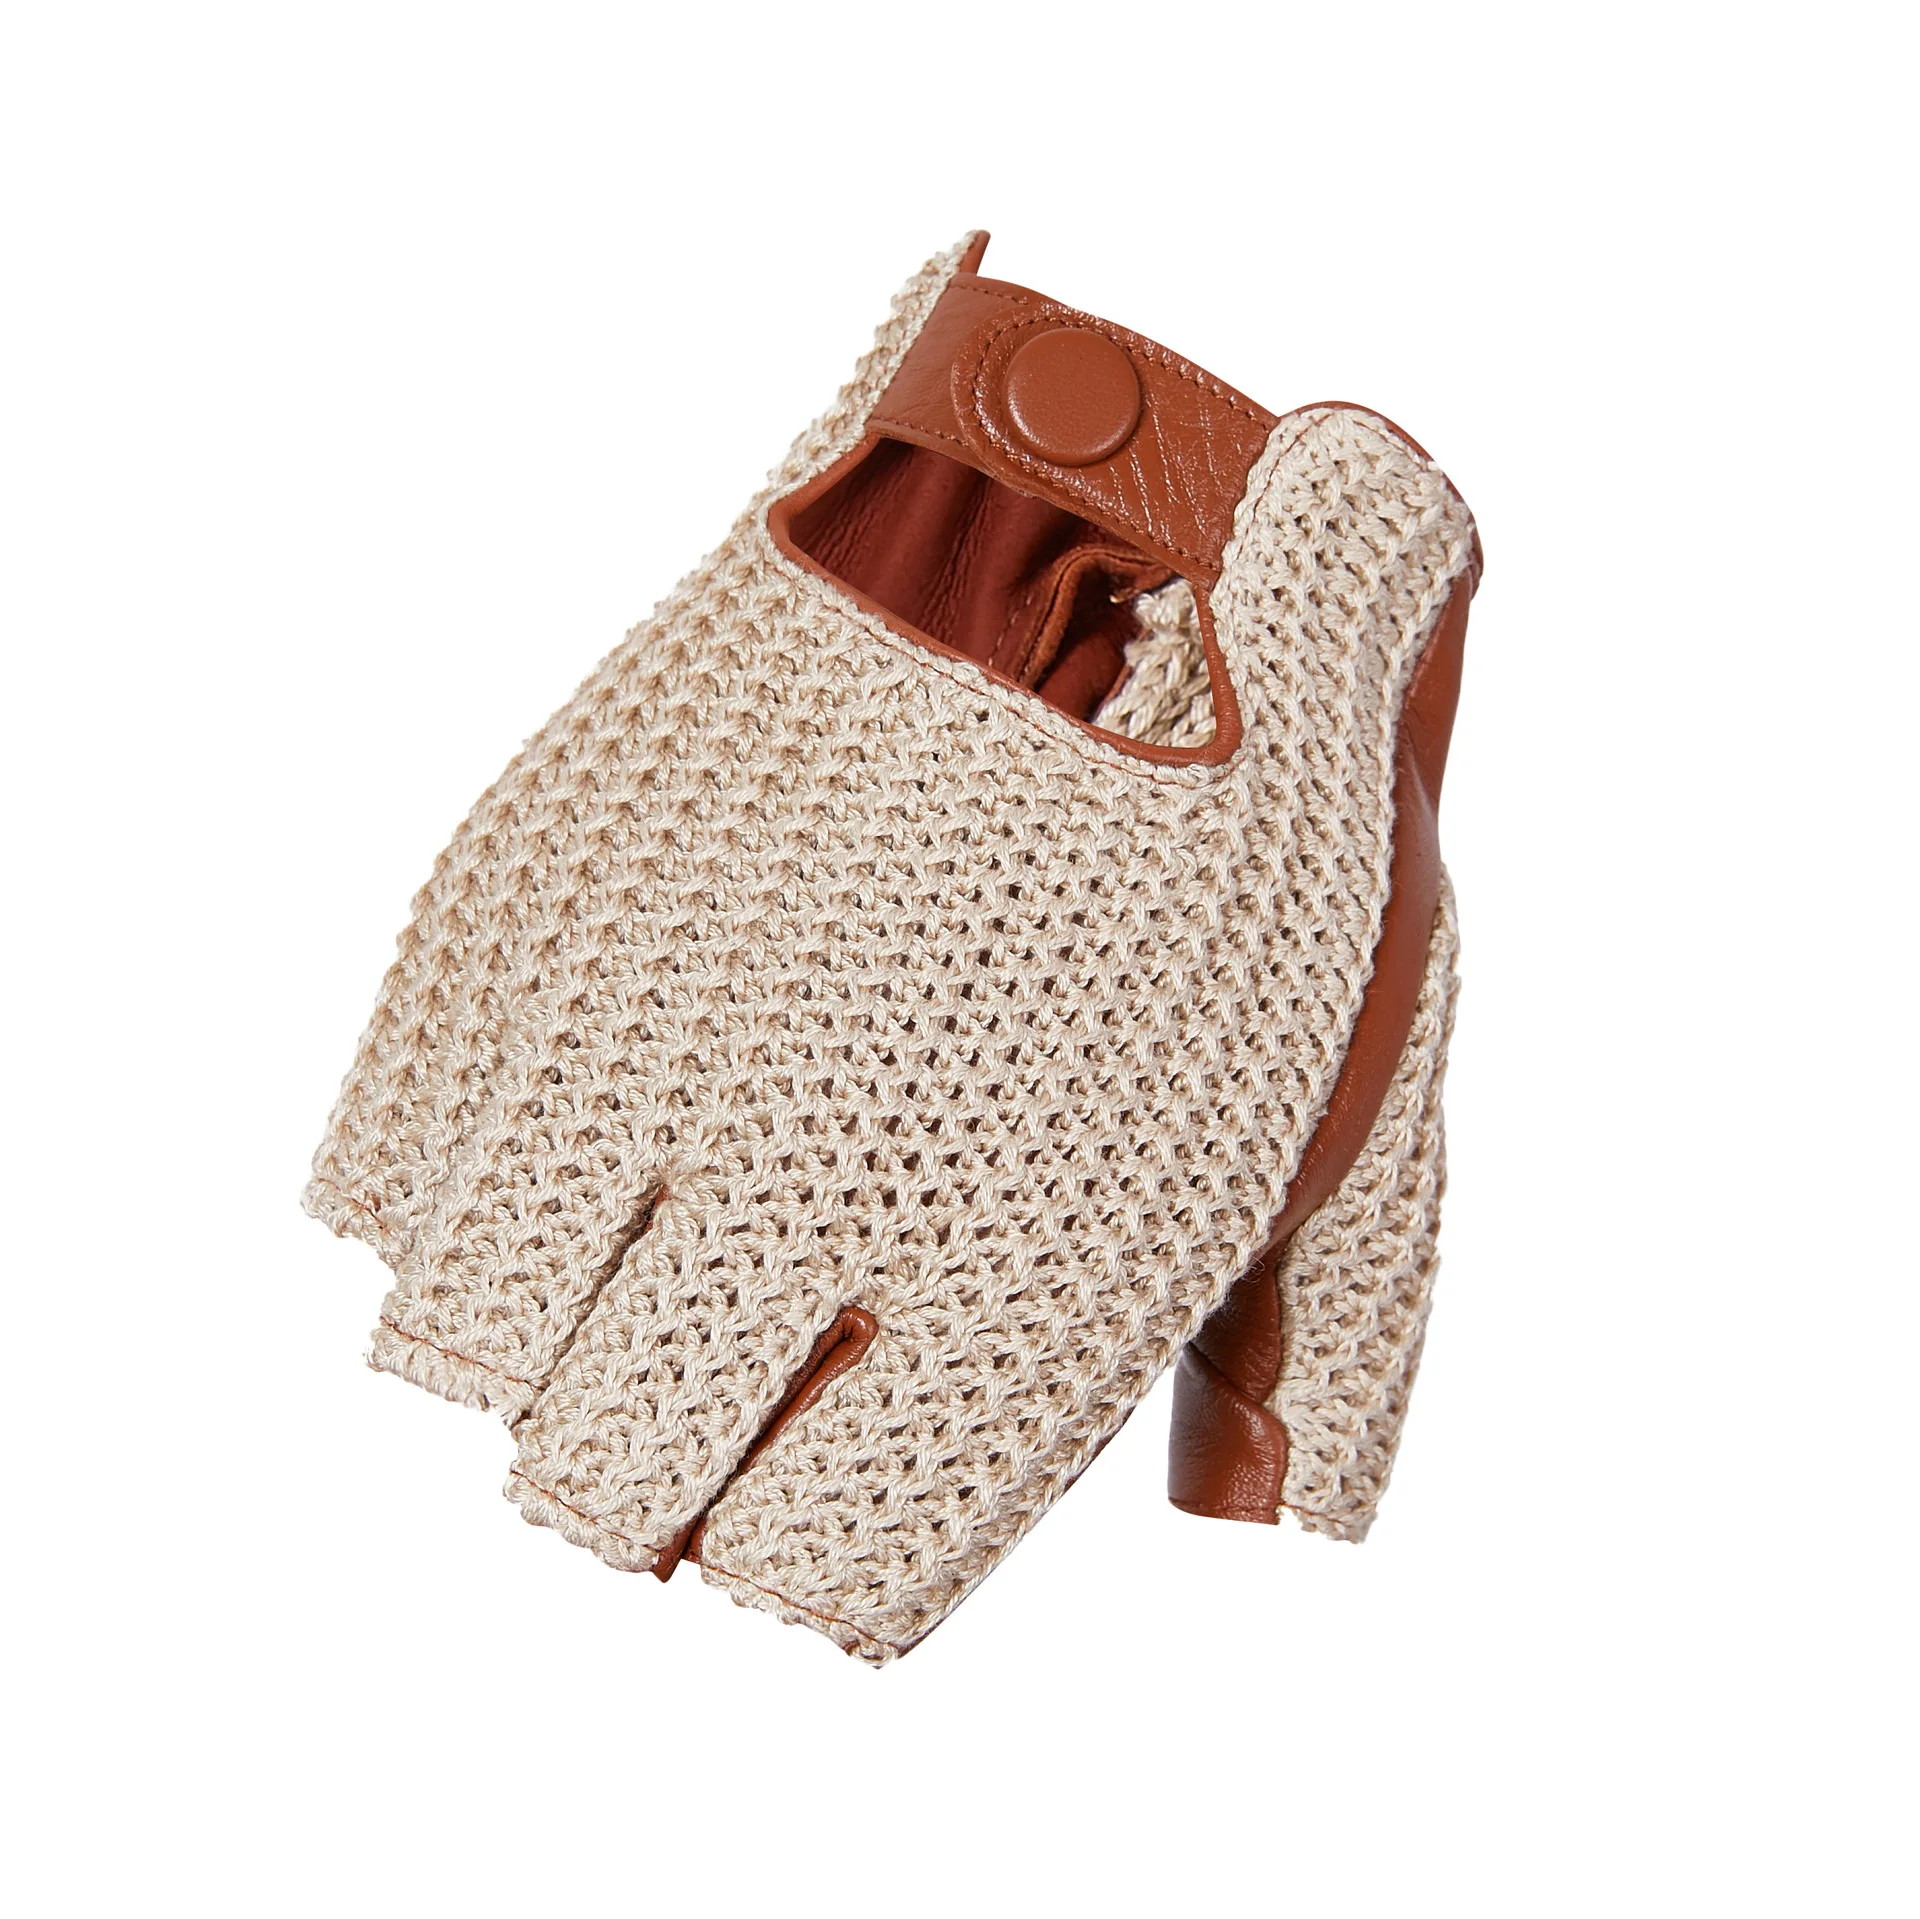 Crochet Fingerless Driving Gloves Brown | Café Leather